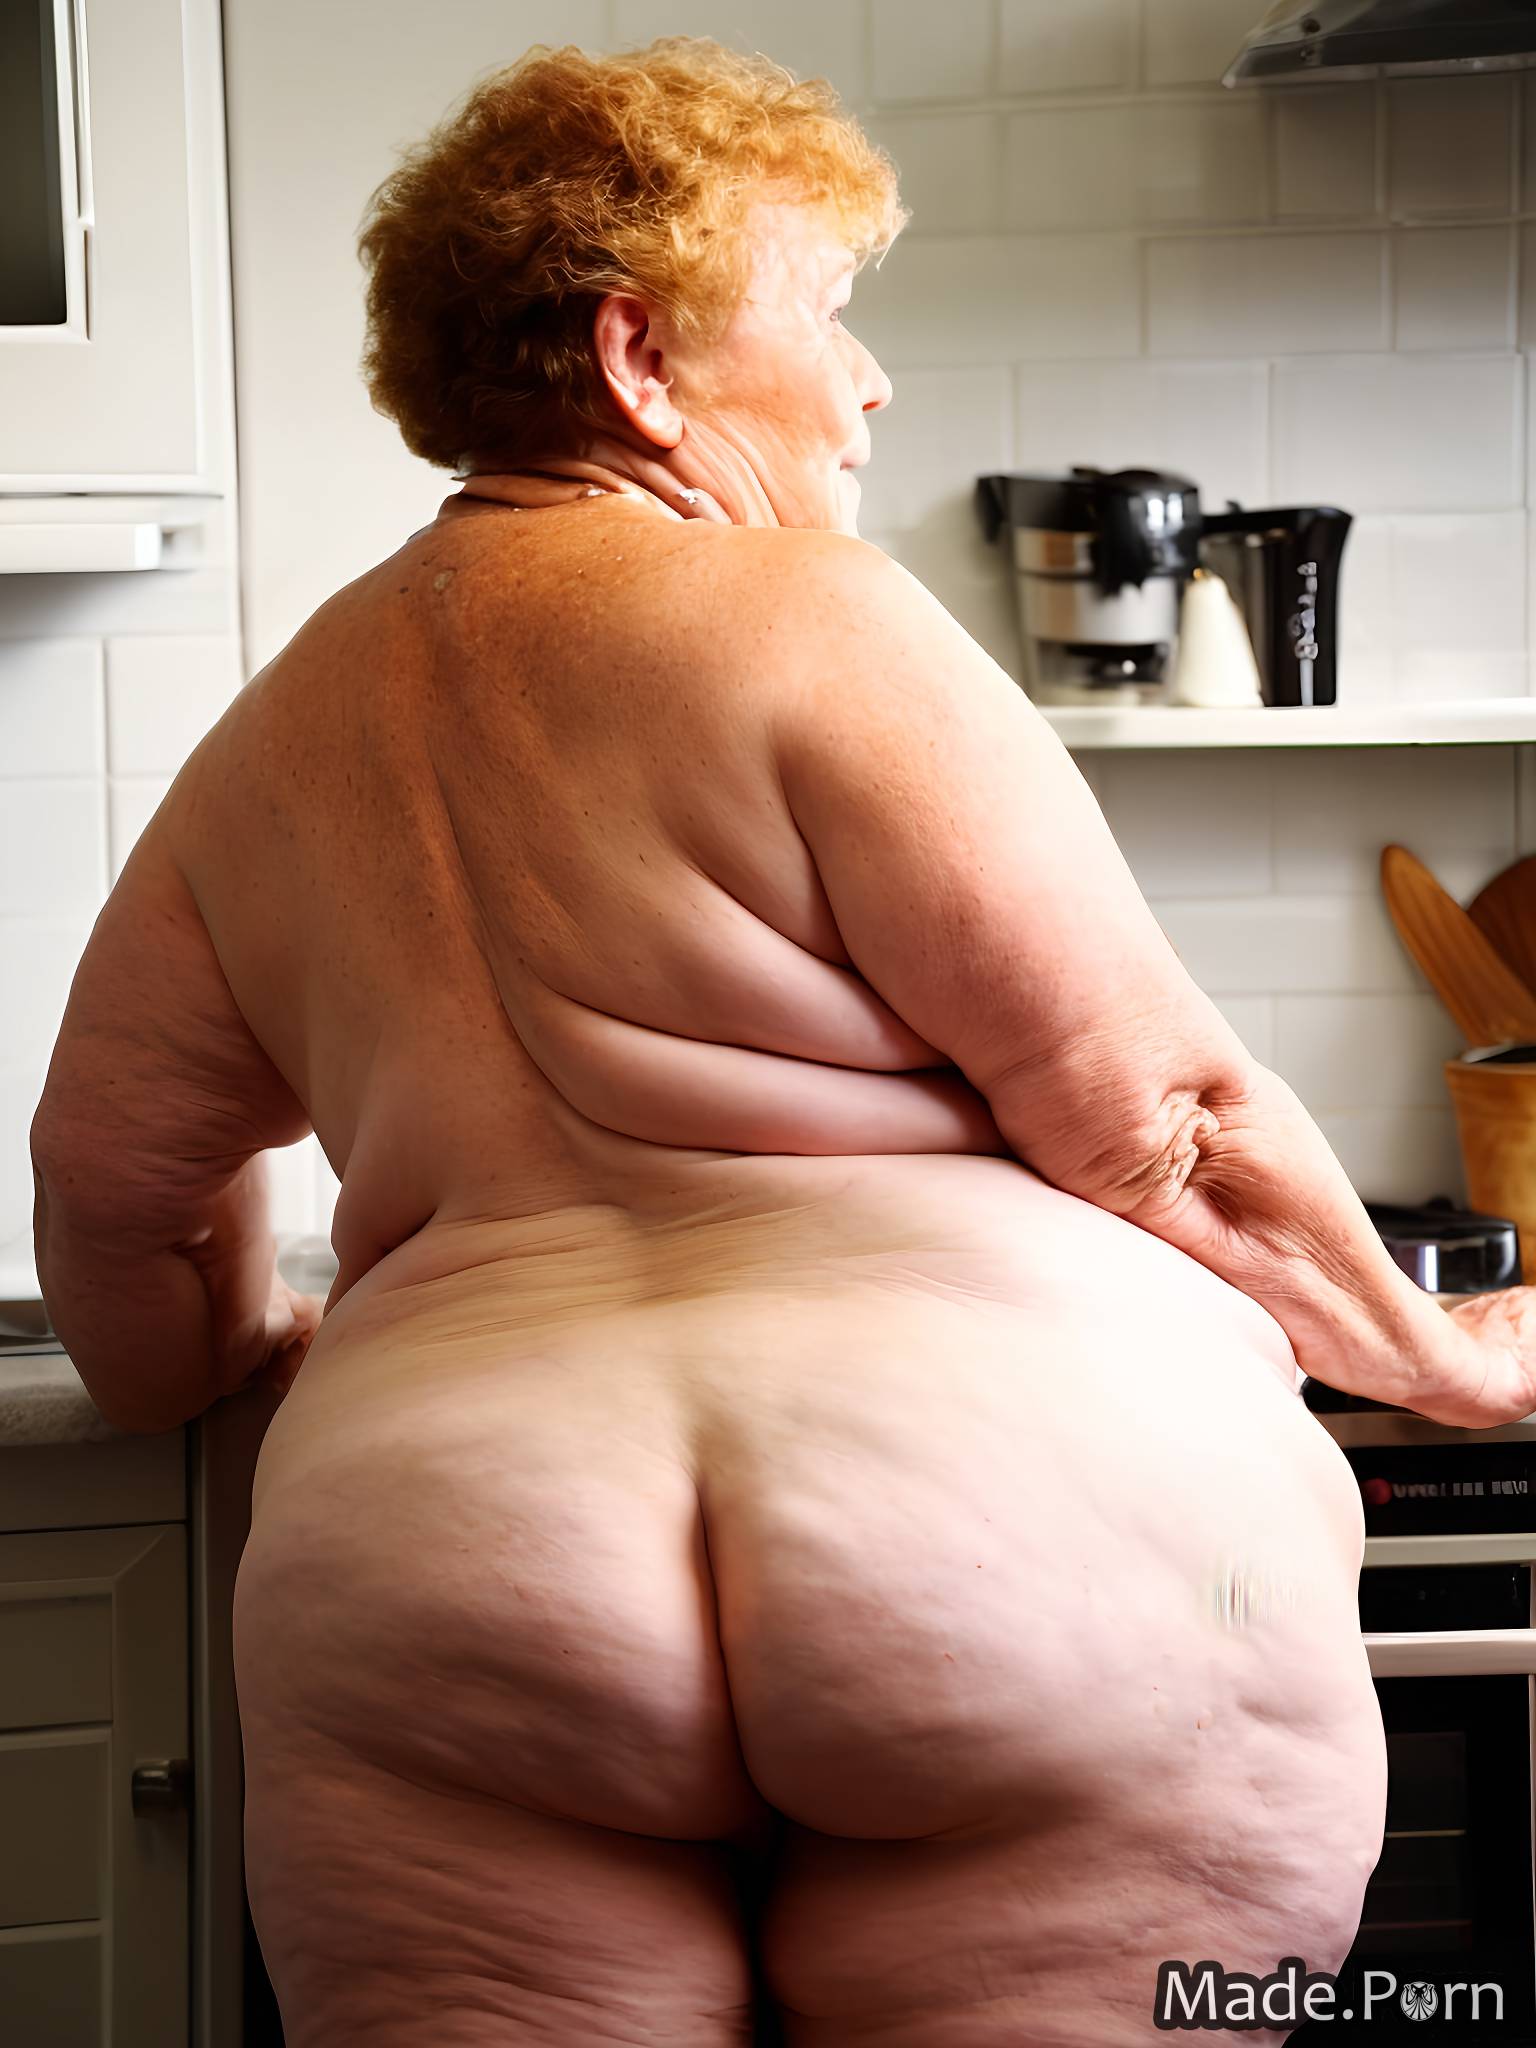 ginger slutty woman big ass bimbo cooking sideview